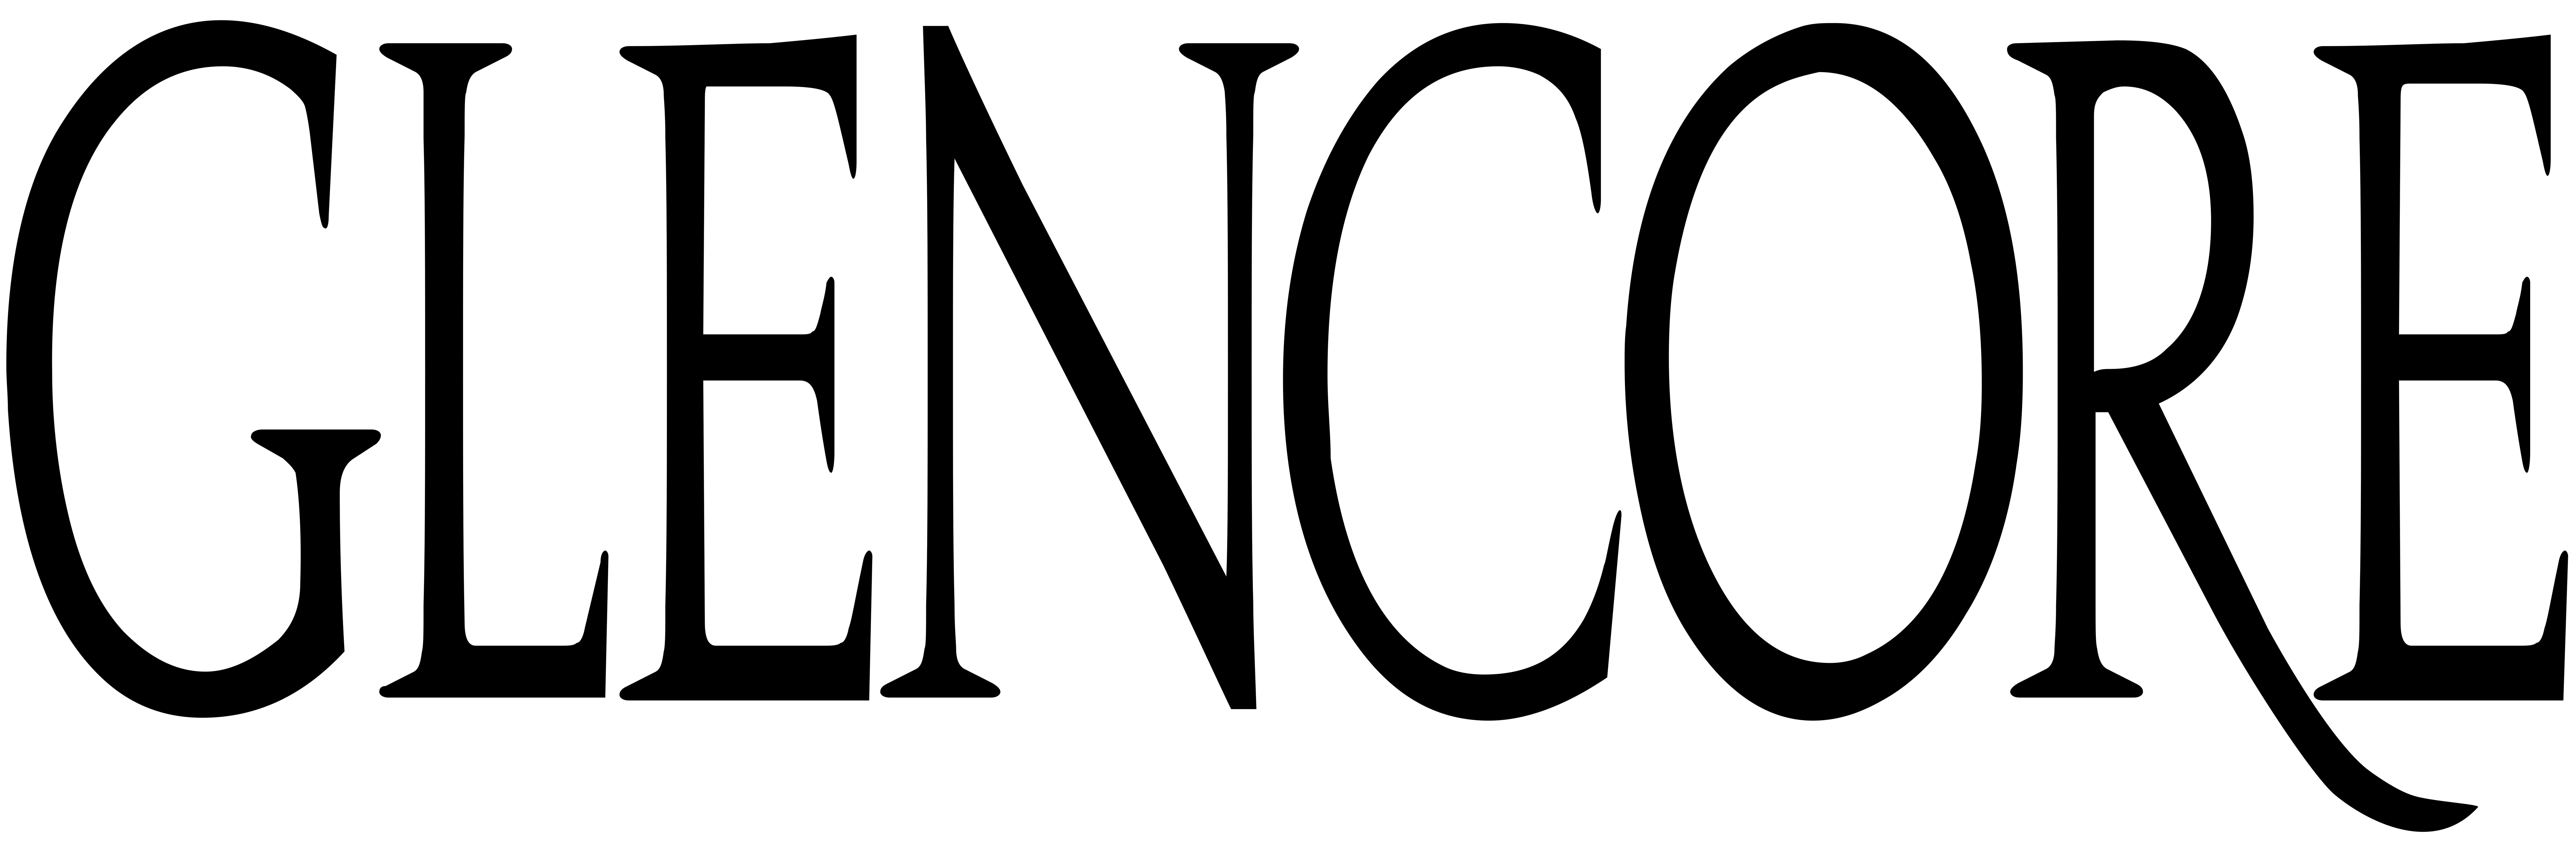 Glencore logo 20